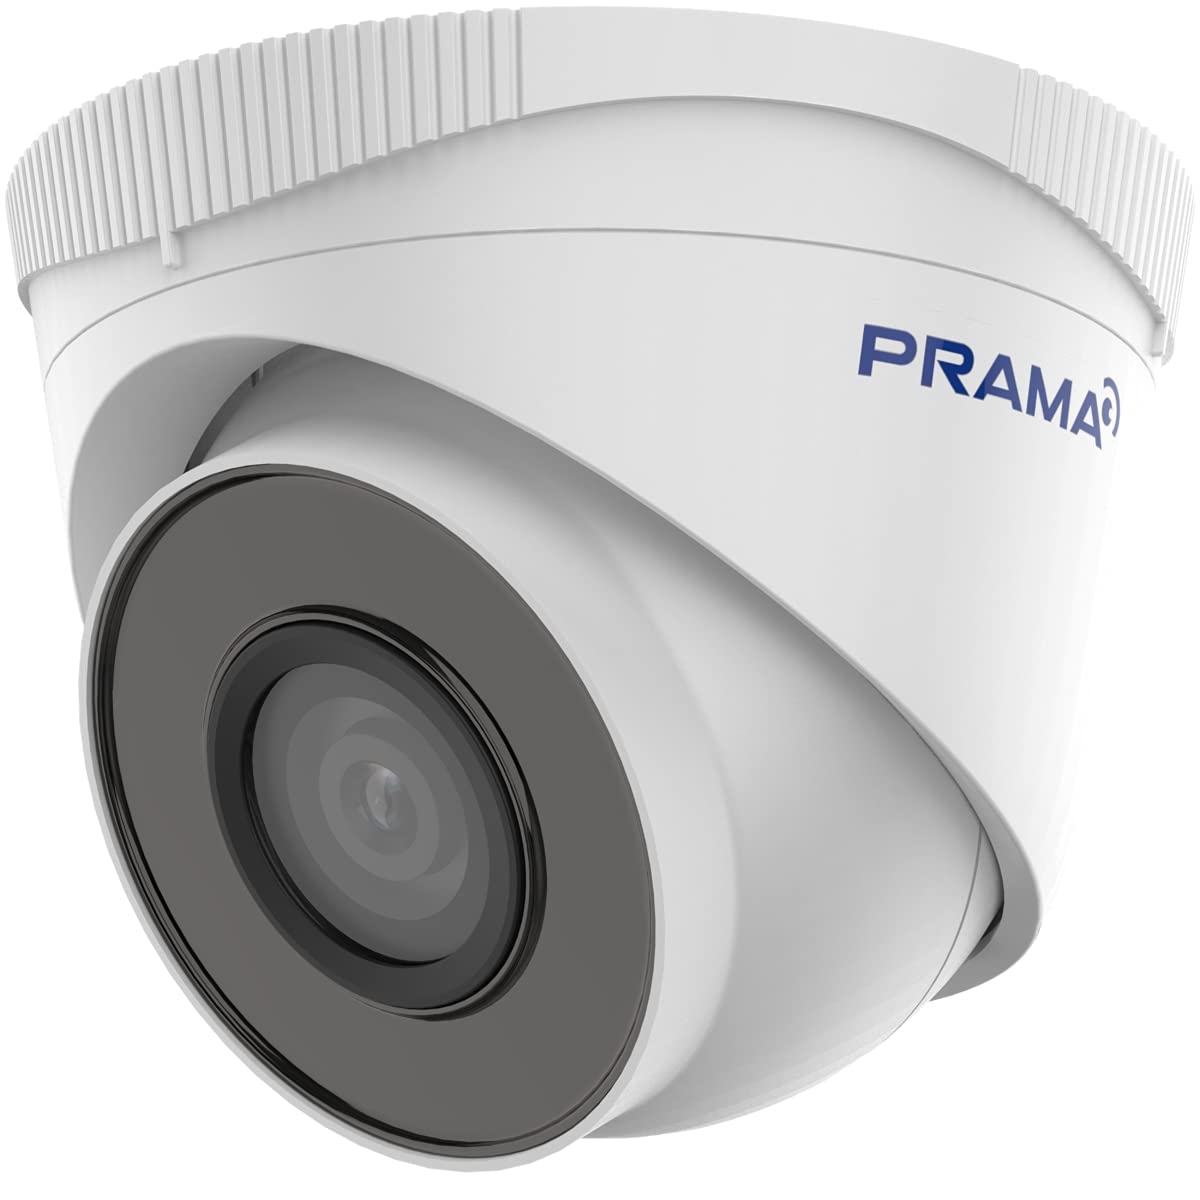 HIKVISION PRAMA PT-NC120D3-I 2 MP IR Fixed Turret Network Camera